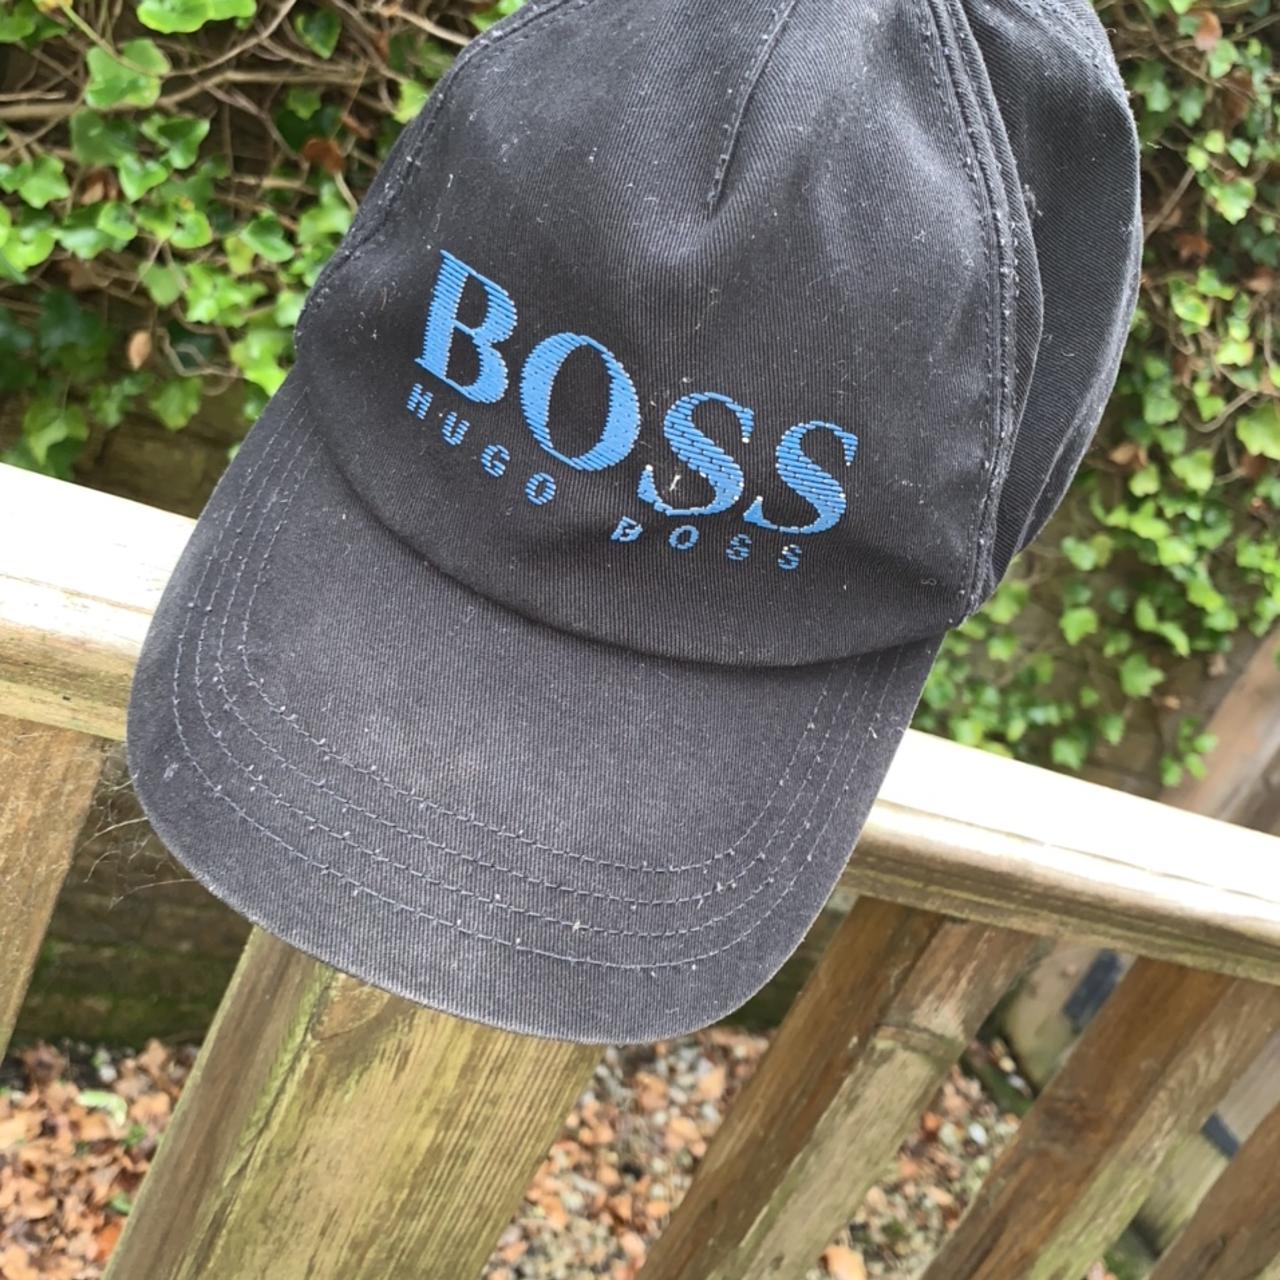 Black Hugo boss cap with dark blue logo, 8/10